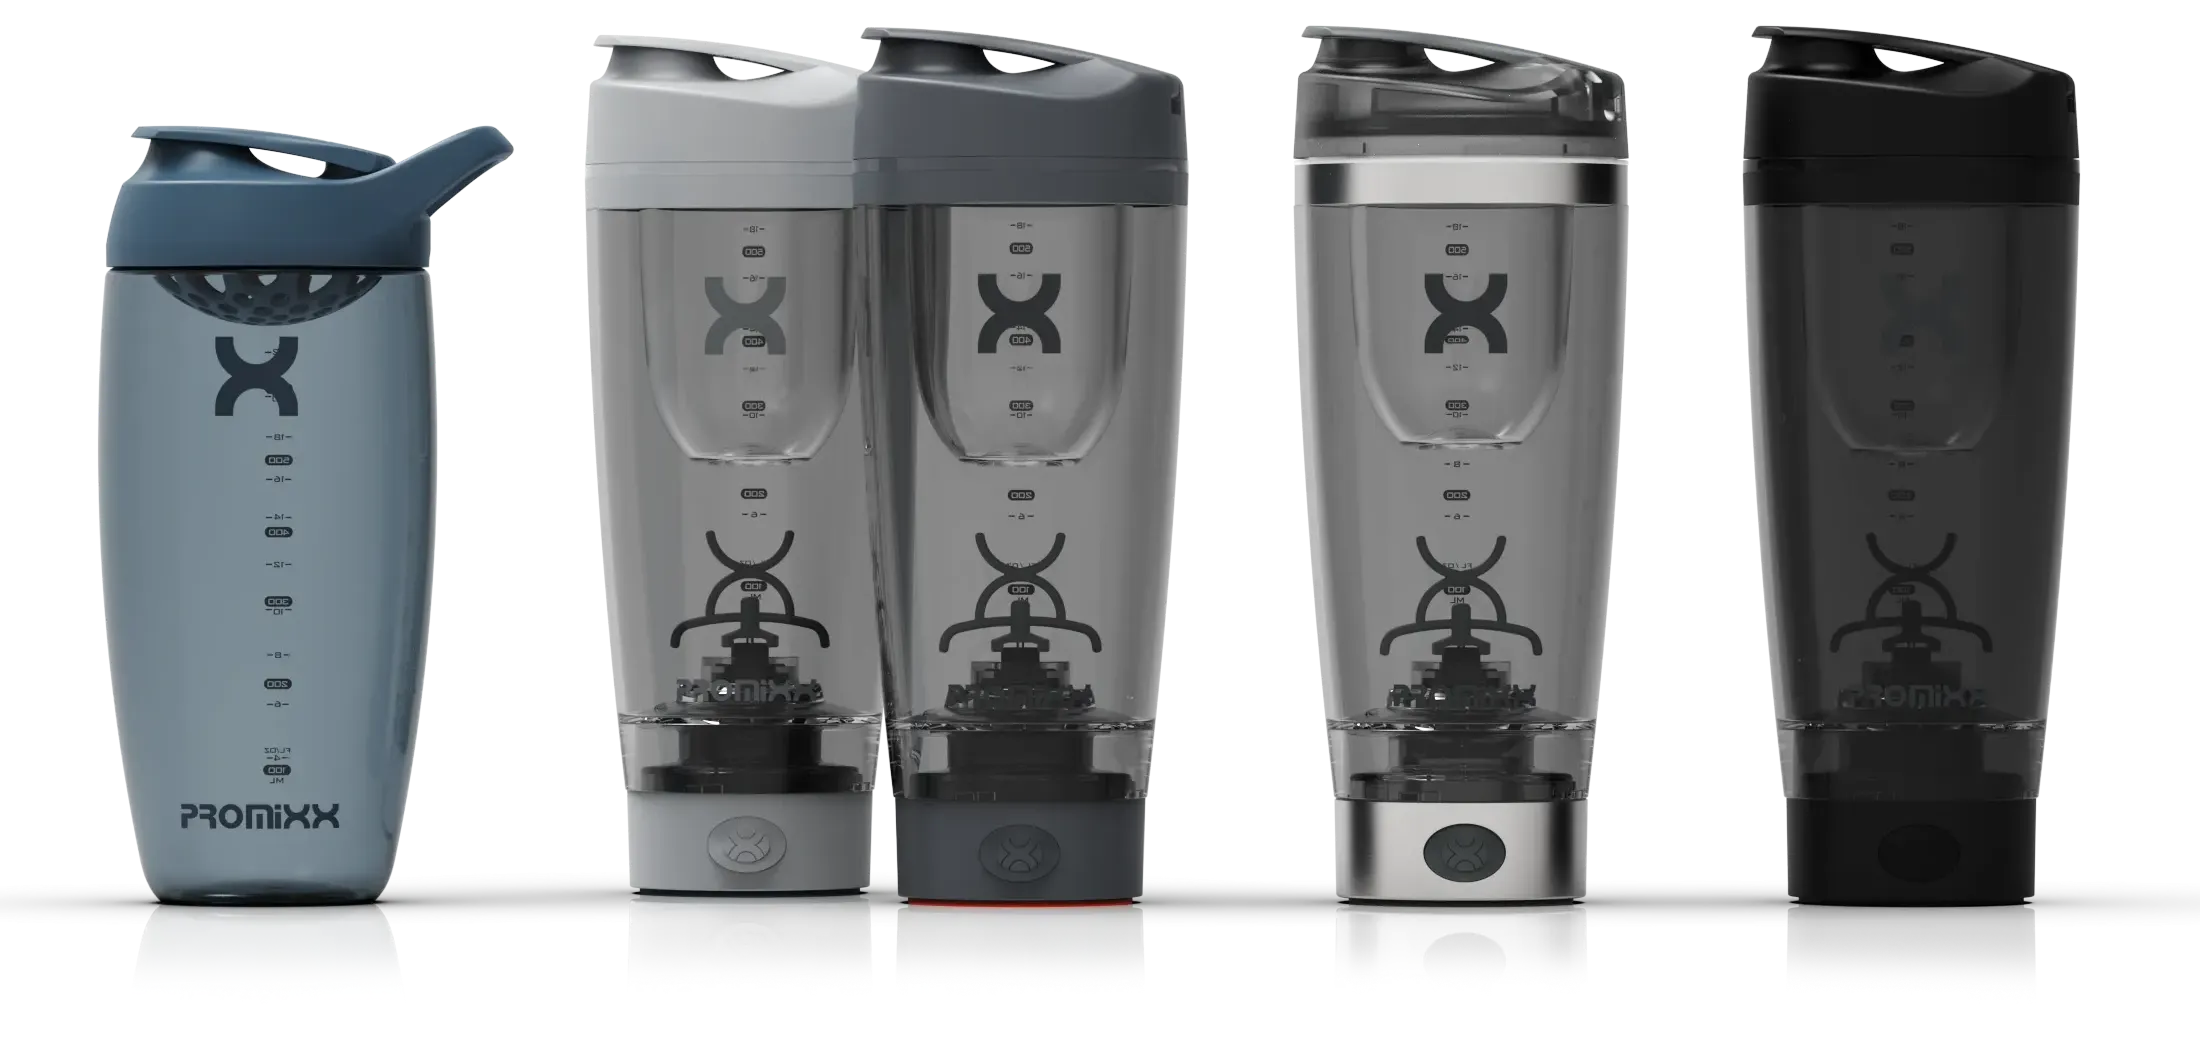 Hybrid Water & Shaker Bottle (12441), Promixx, Shaker